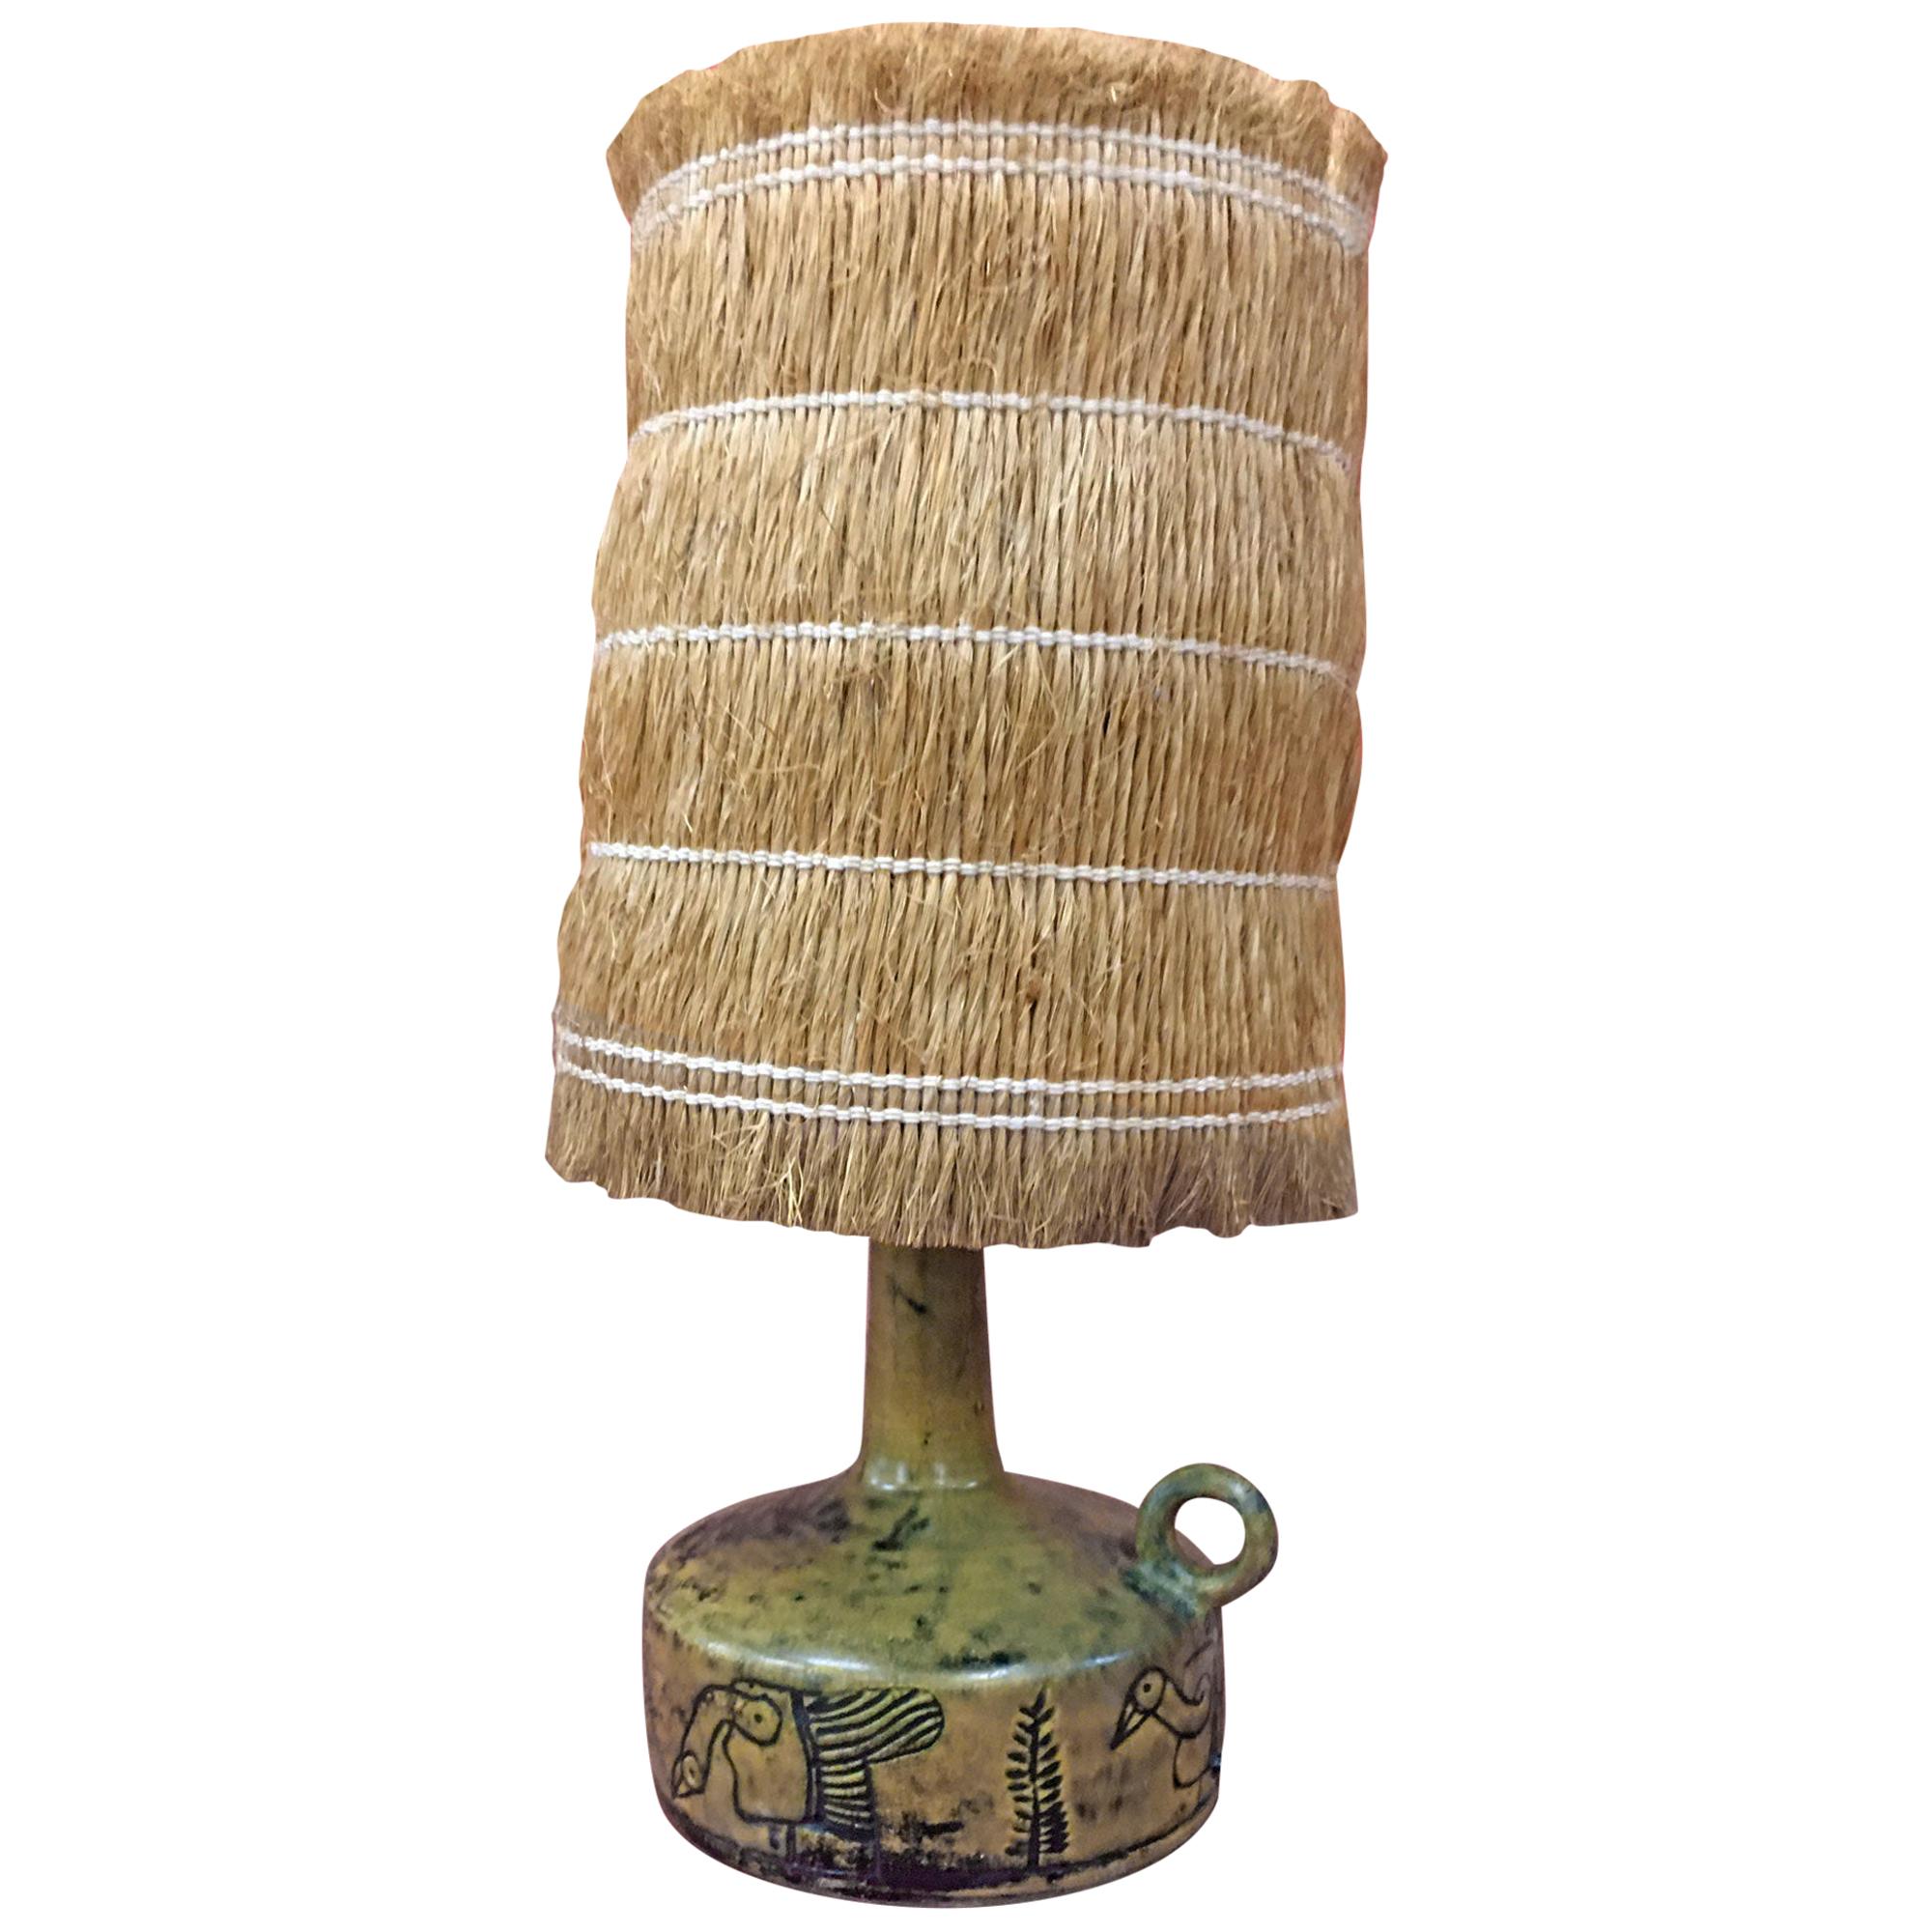 Jacques Blin, Ceramic Lamp circa 1950 with Its Original Shade